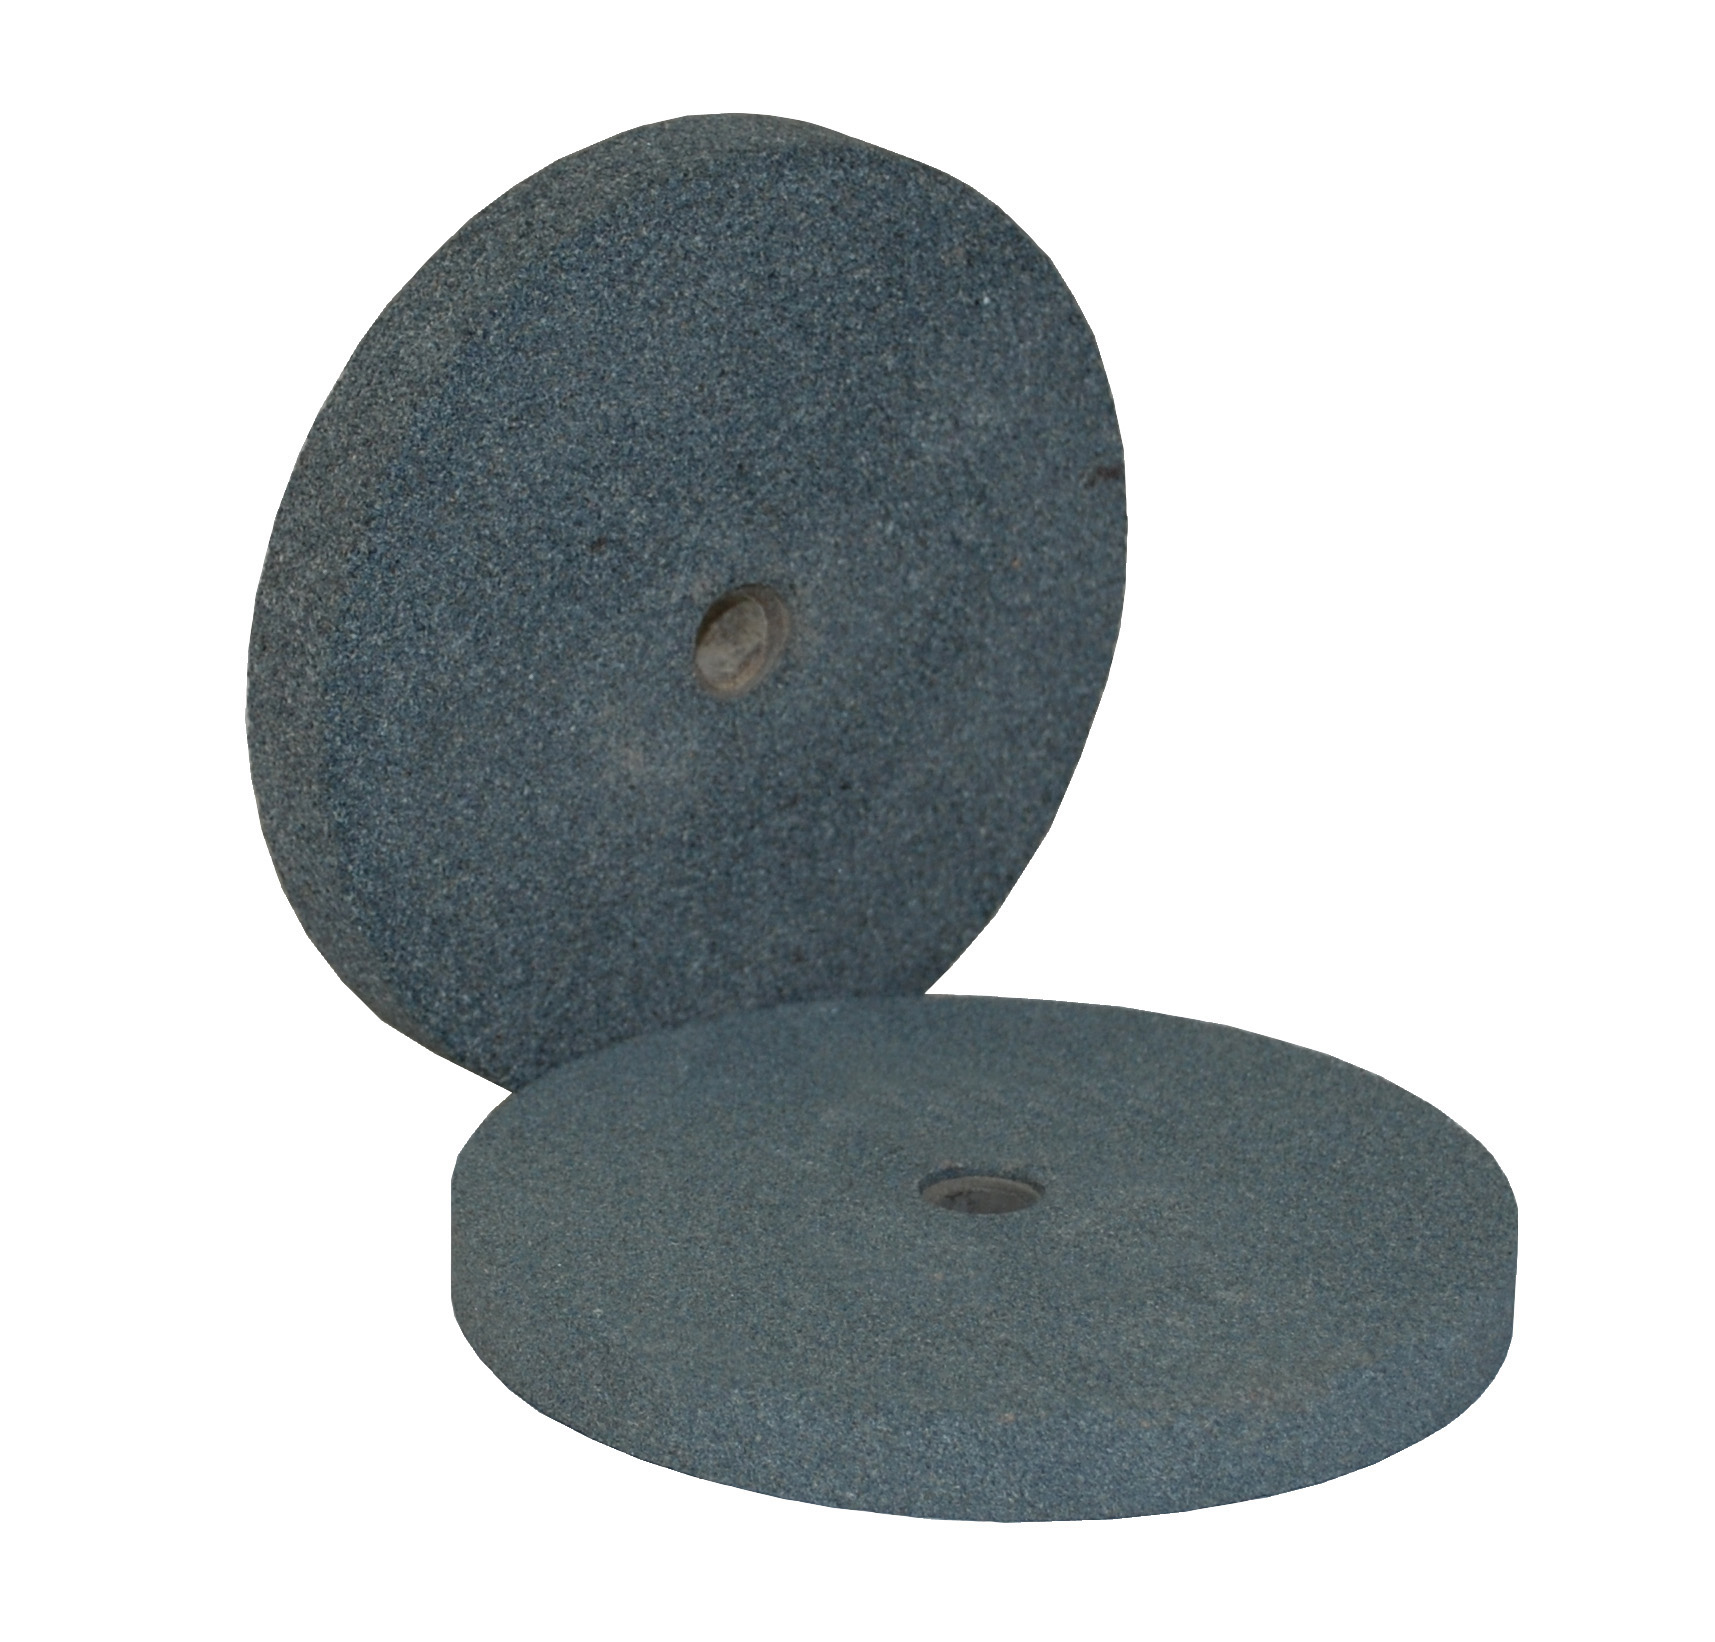 BULLE Πέτρα για δίδυμους τροχούς πάγκου 200x20x16 grit 60